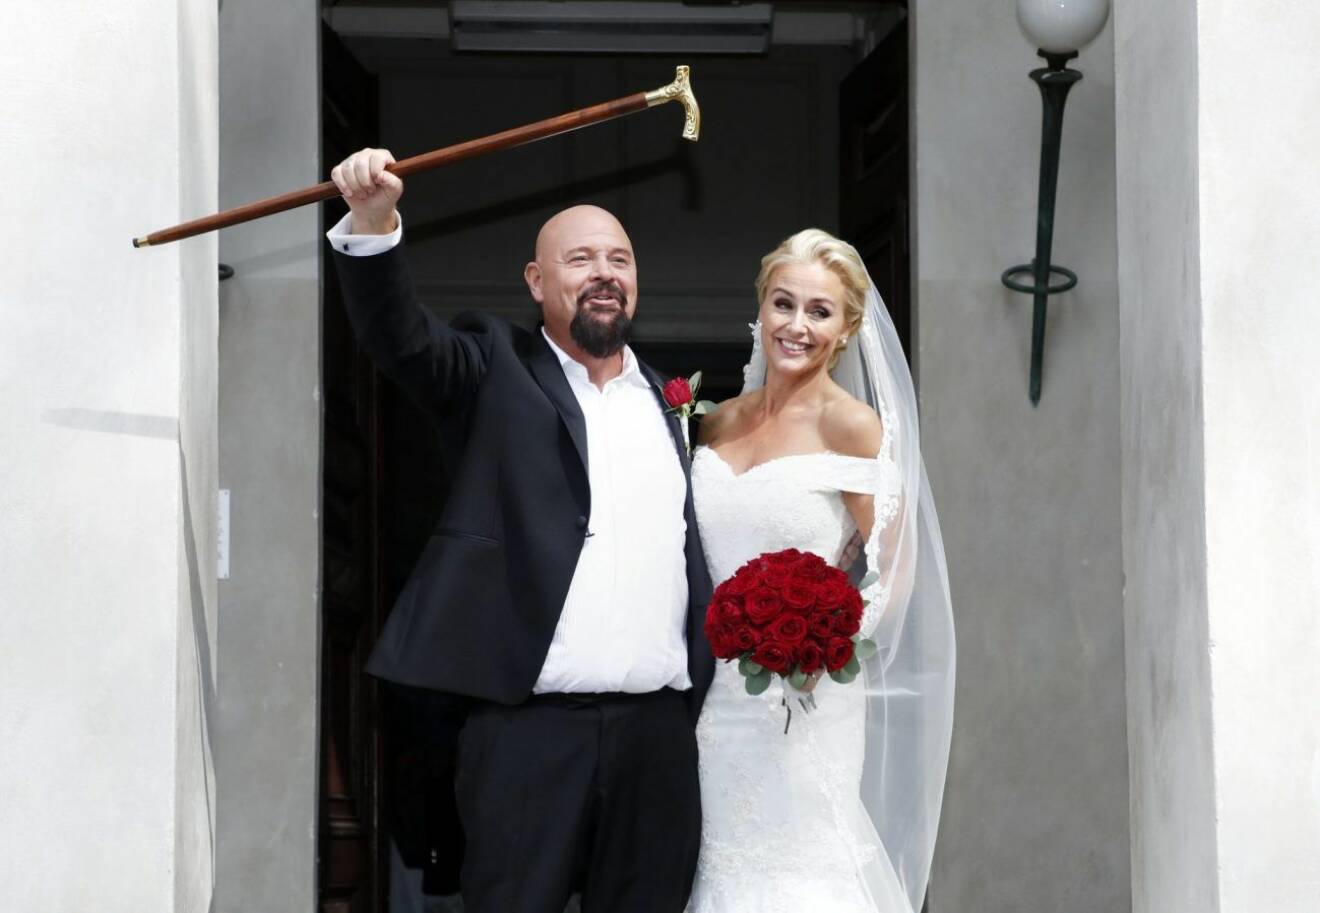 Anders Bagge och Johanna Lind gifte sig i augusti 2018. 